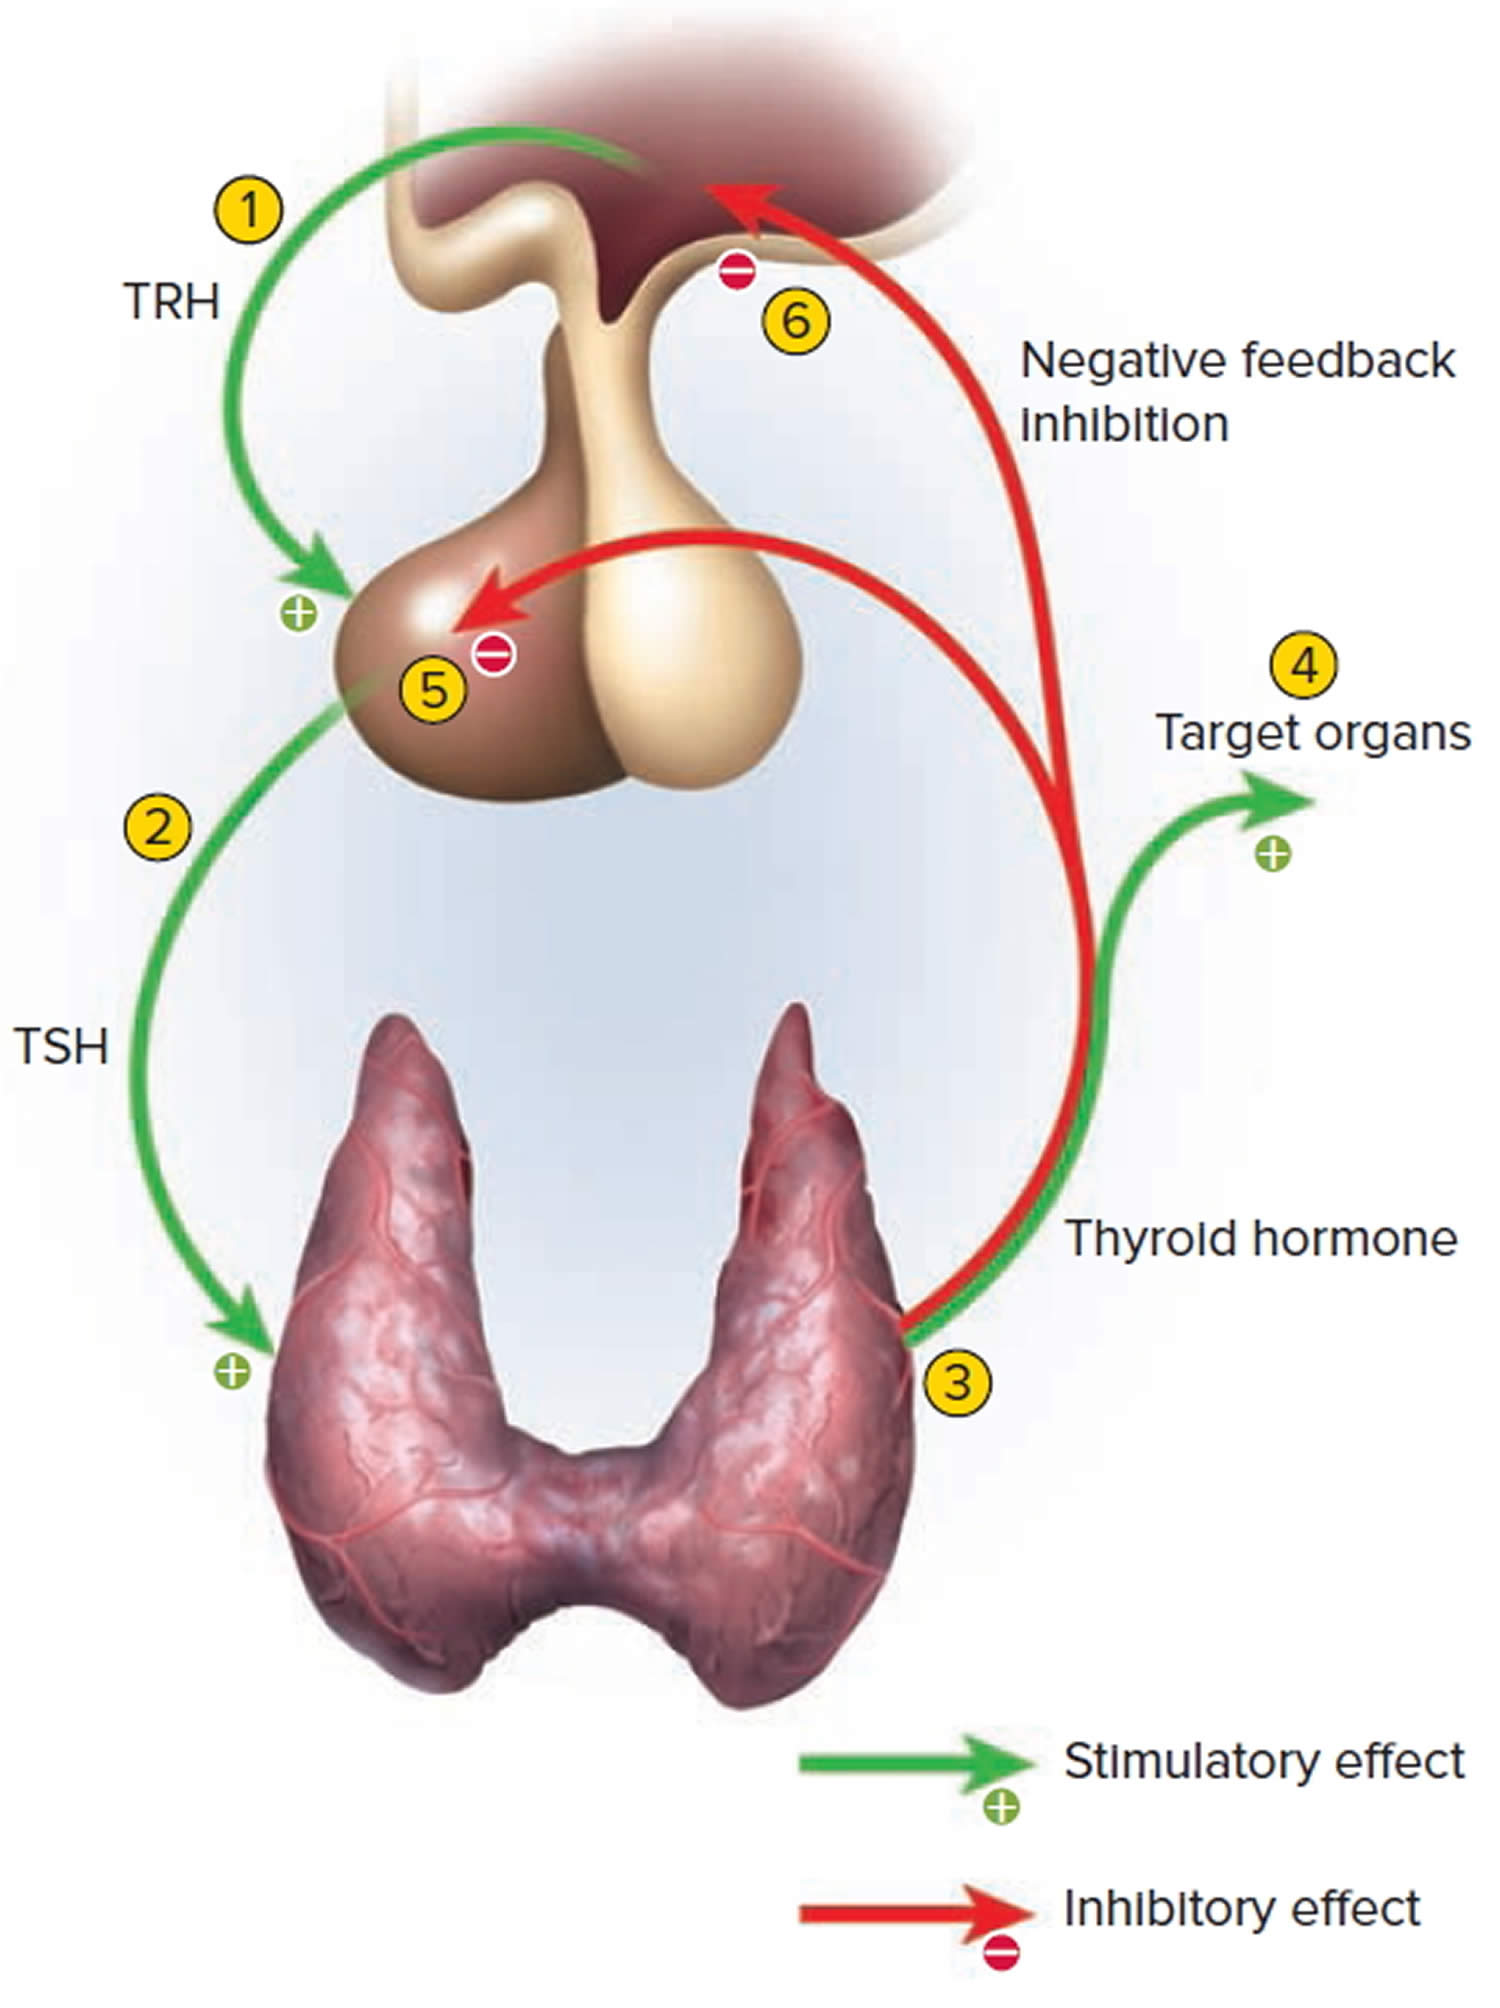 Control of thyroid hormone secretion